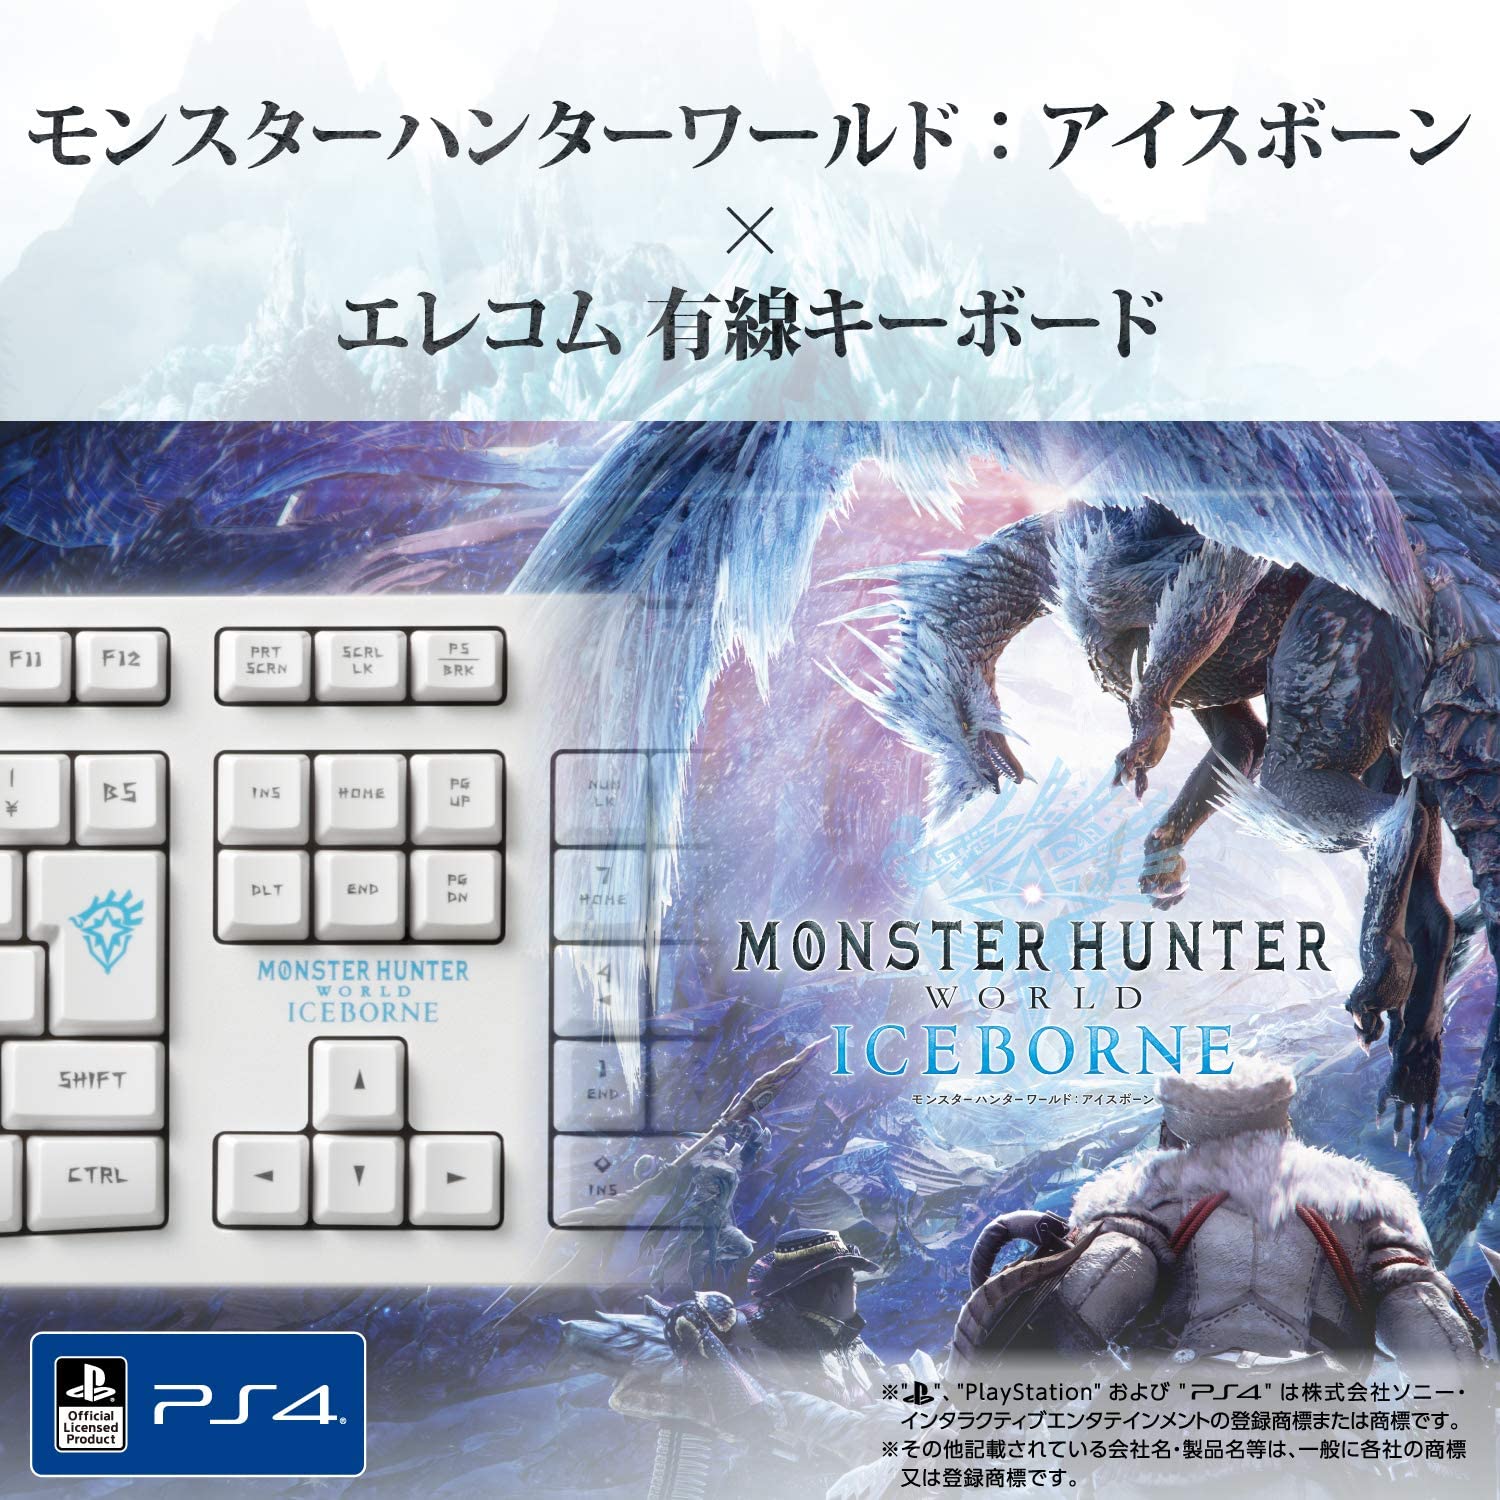 Elecom Monster Hunter World: Iceborn x Elecom Wired Full Keyboard